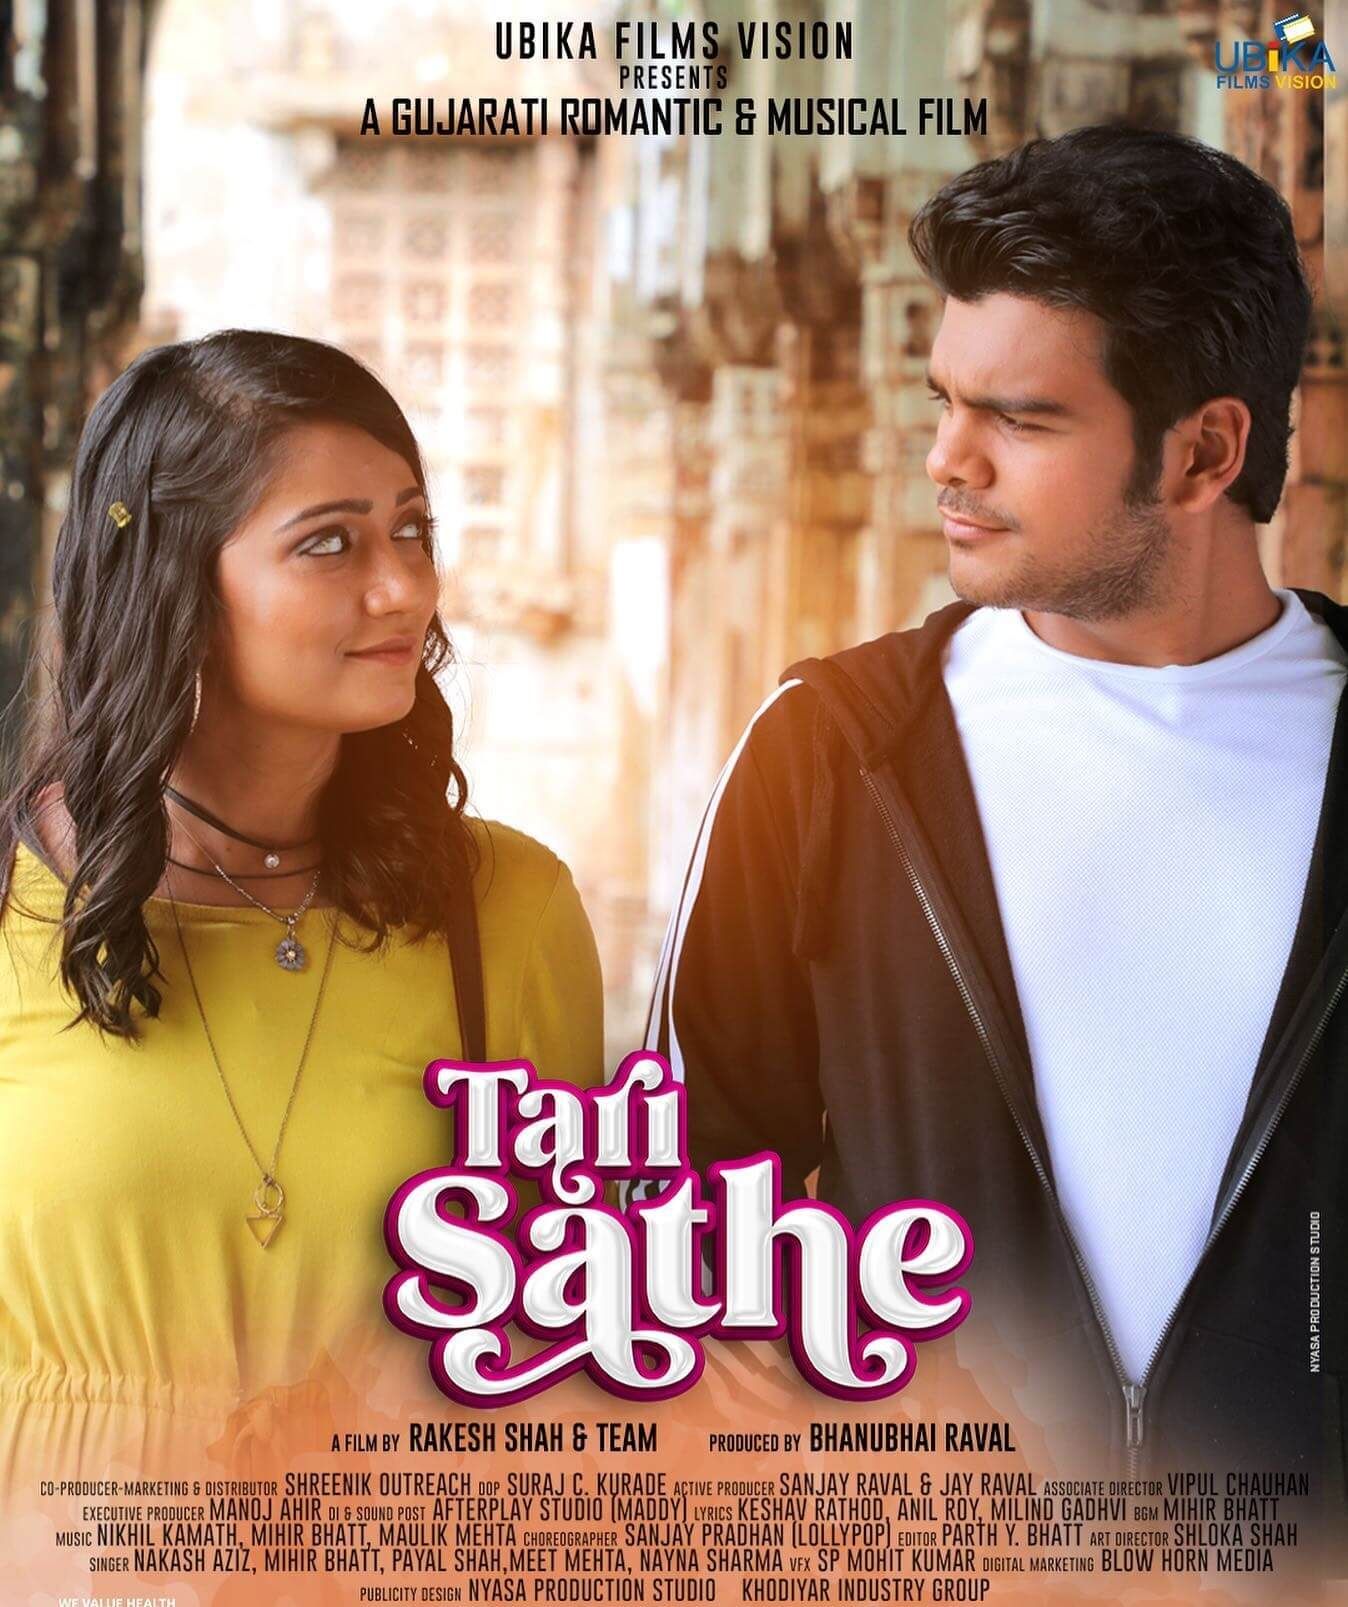 Tari Sathe (2022) Hindi Dubbed HDRip download full movie